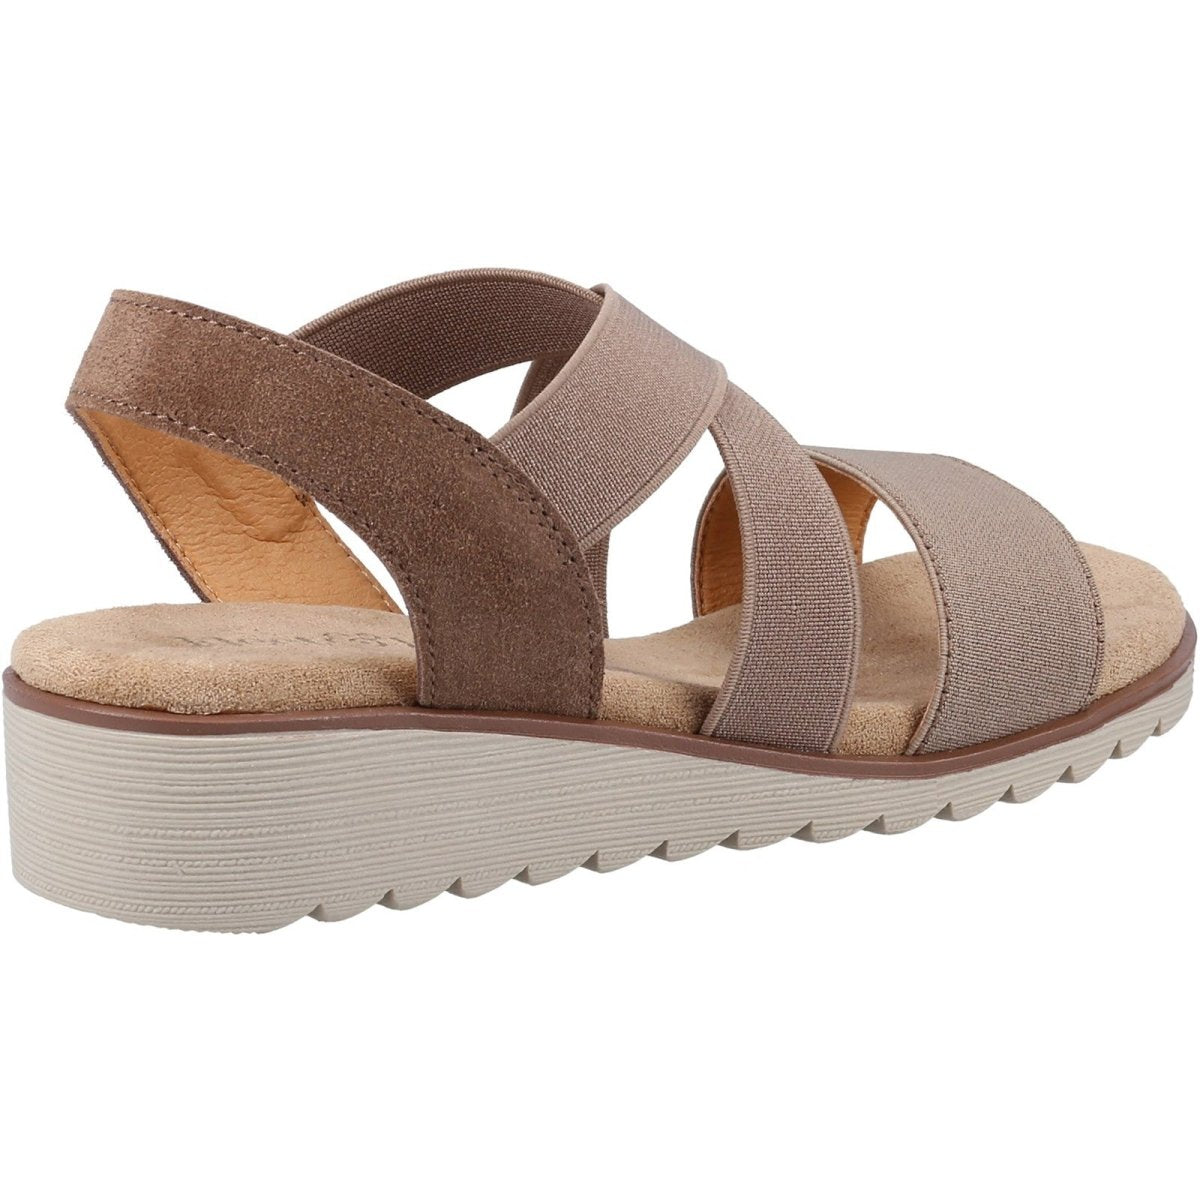 Fleet & Foster Freesia Ladies Open-Toe Summer Sandals - Shoe Store Direct